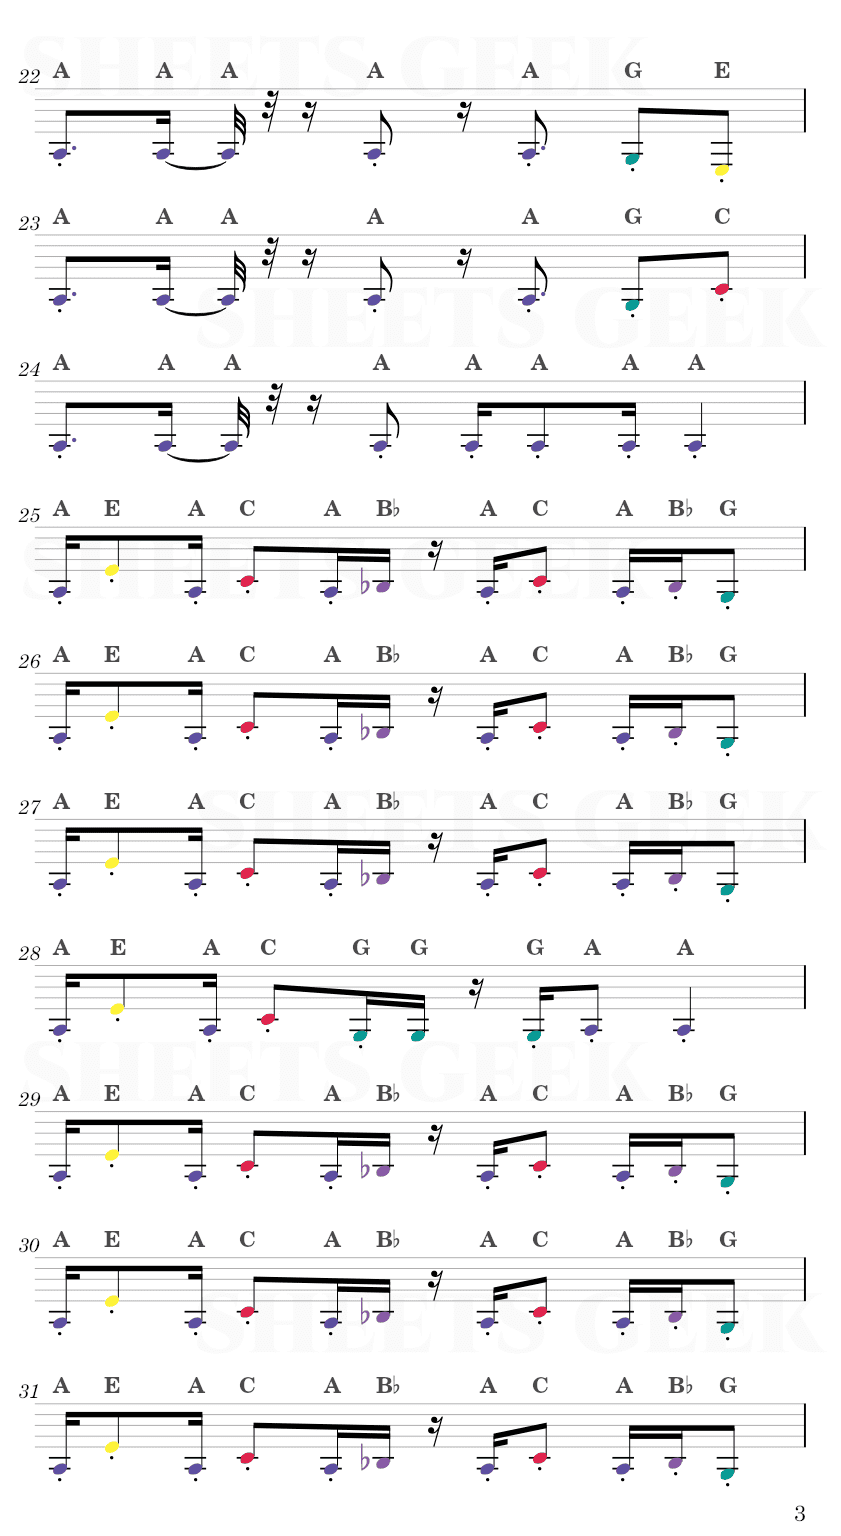 Mortal Kombat Theme Easy Sheet Music Free for piano, keyboard, flute, violin, sax, cello page 3